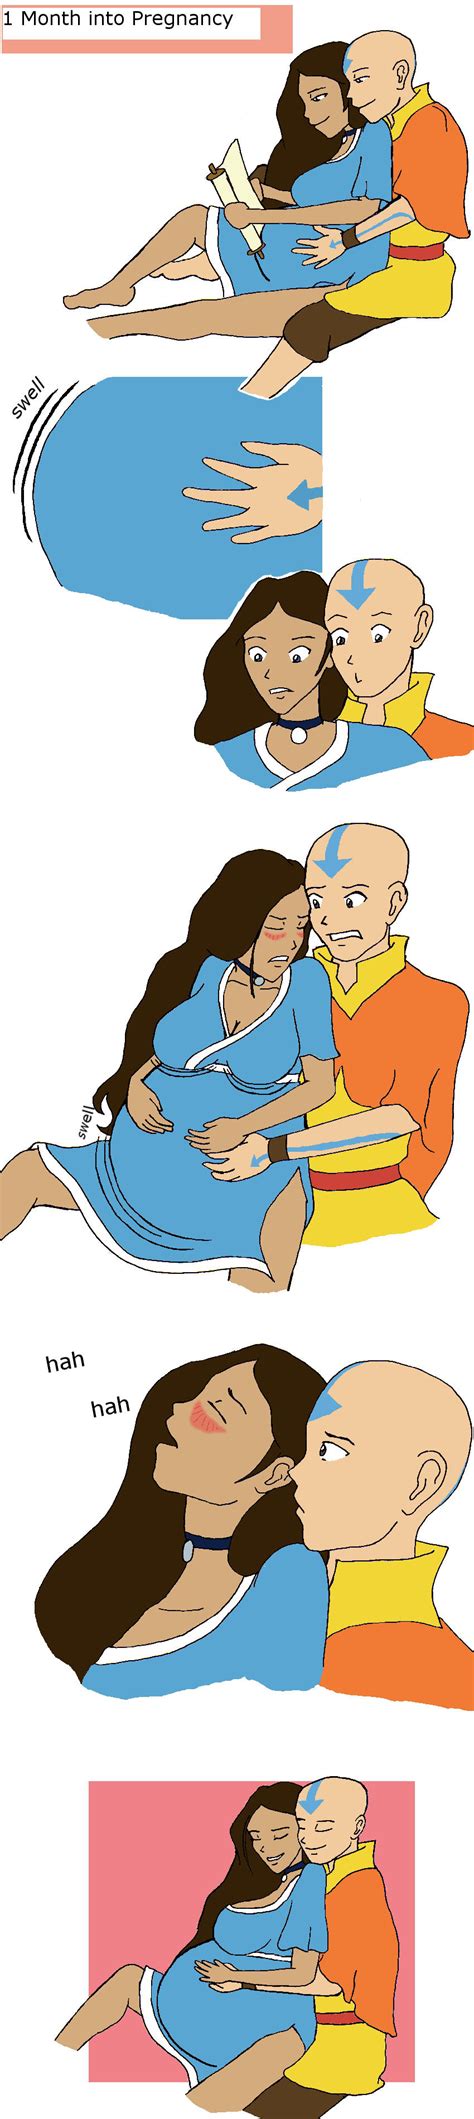 1 Month Into Pregnancy By Weebie3 On Deviantart